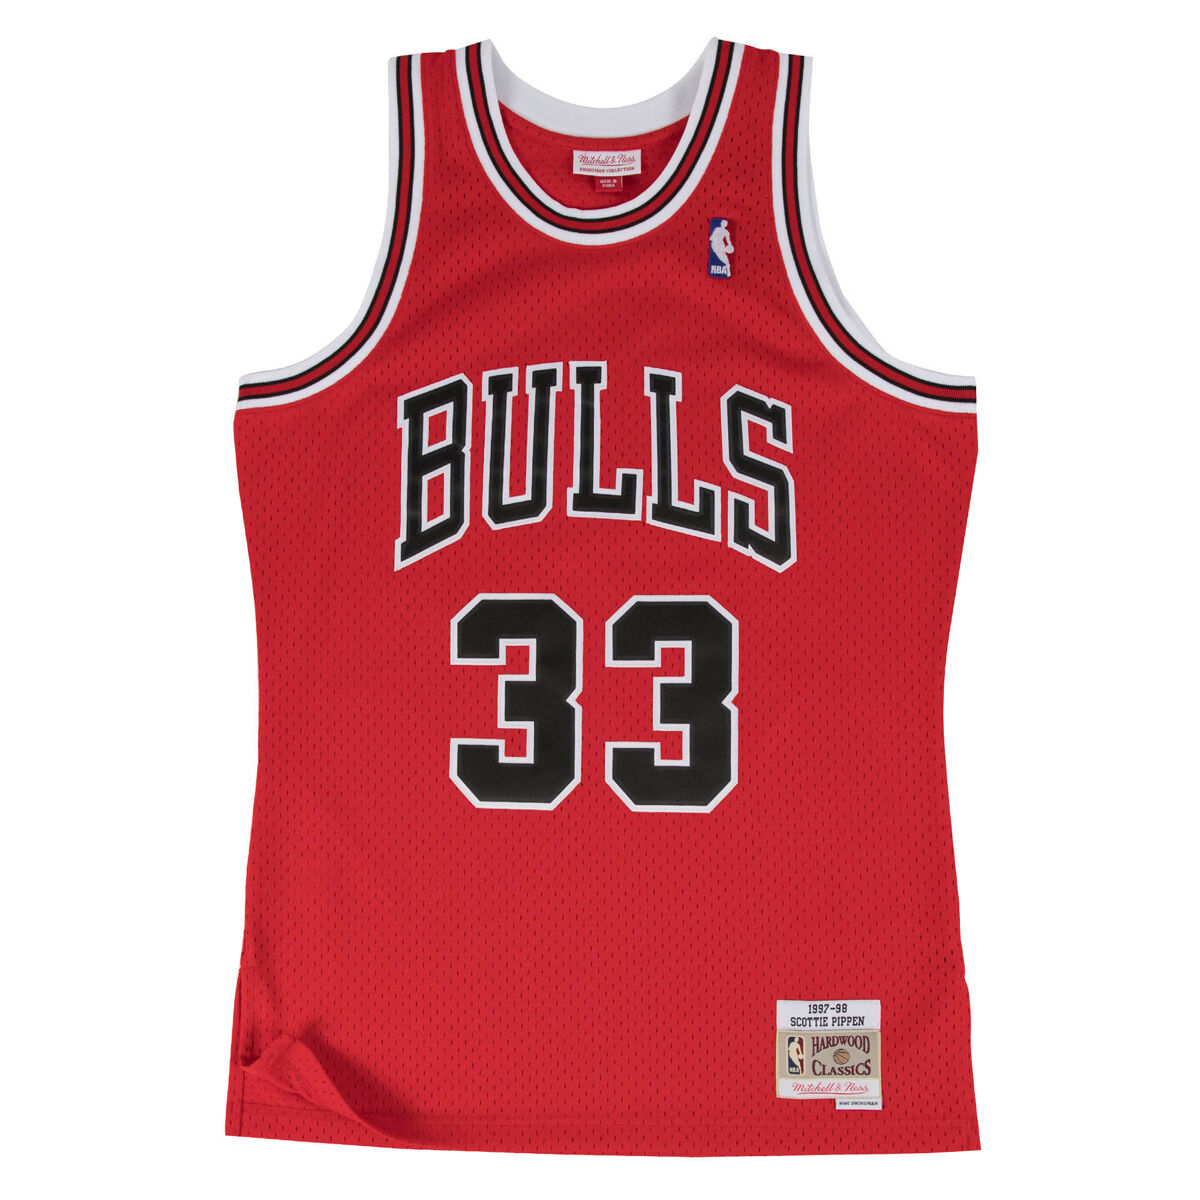 bulls alternate jersey